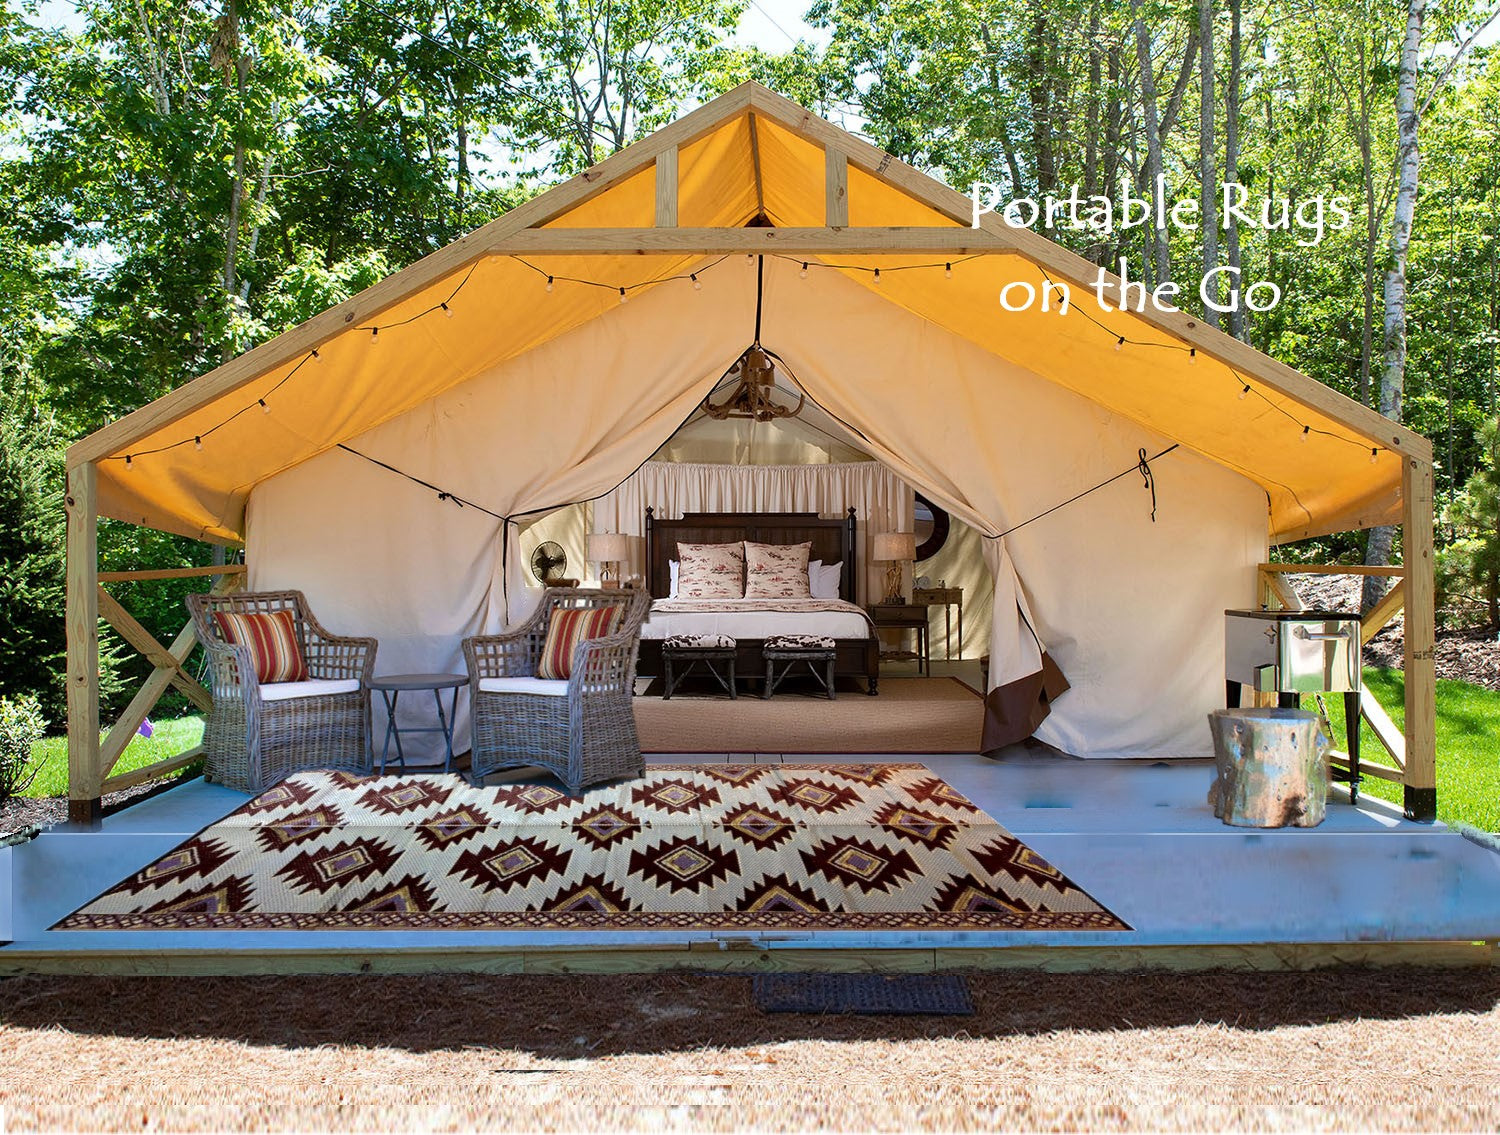 Outdoor rugs Geometric Portable waterproof camping patio decor